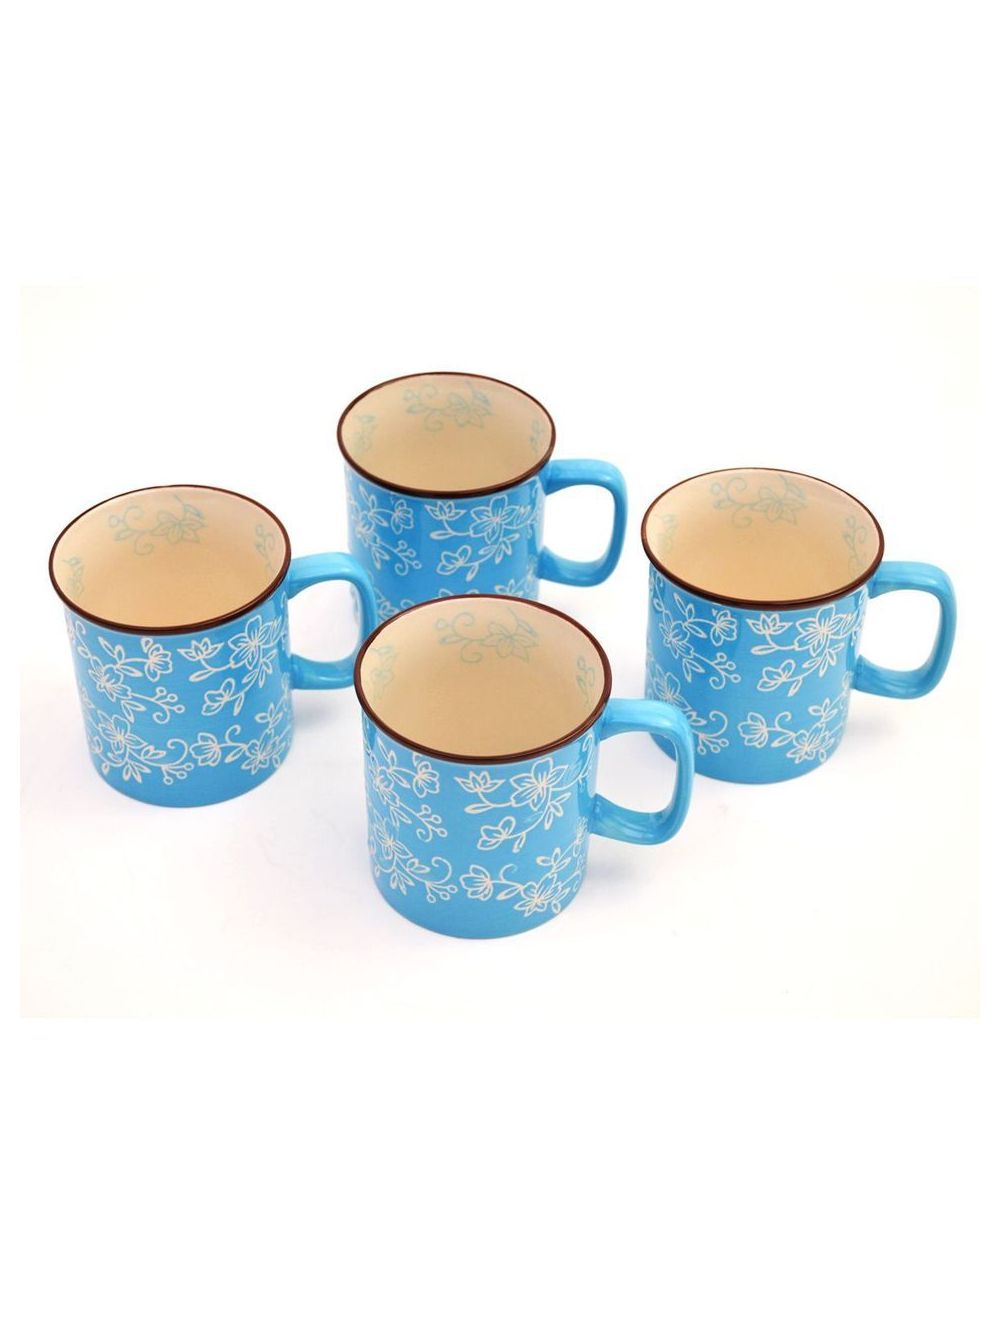 Temp-tations Floral Lace Mug Set of 4 -T49069-light blue